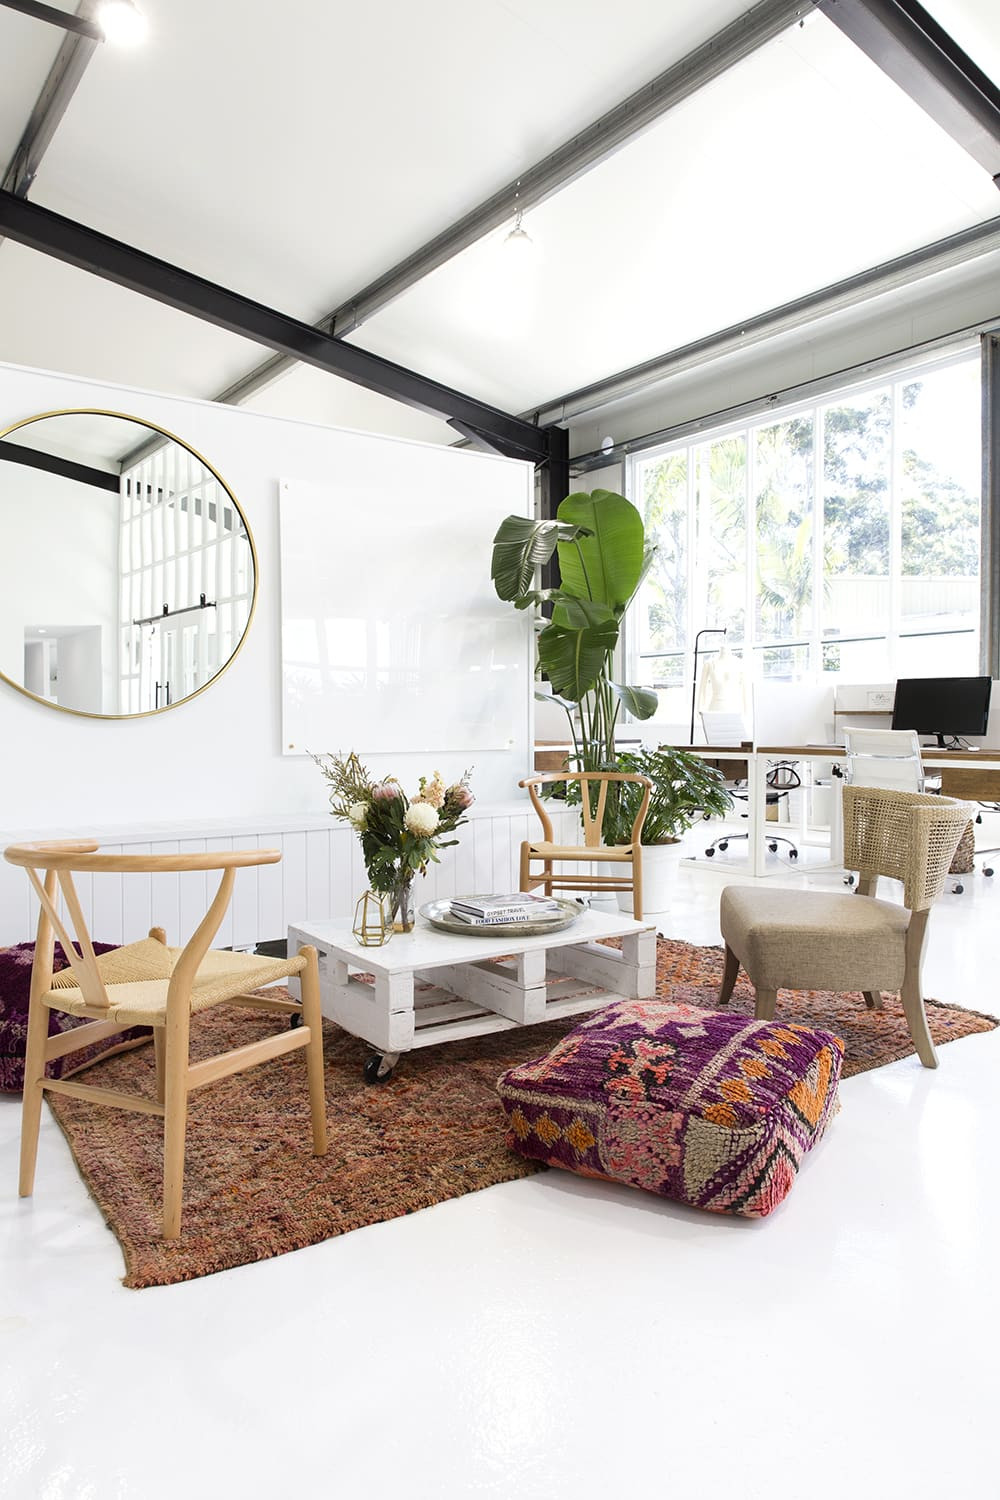 Boho Minimalist Living Room
 This Fresh fice Design Brings Minimalism & Boho To her